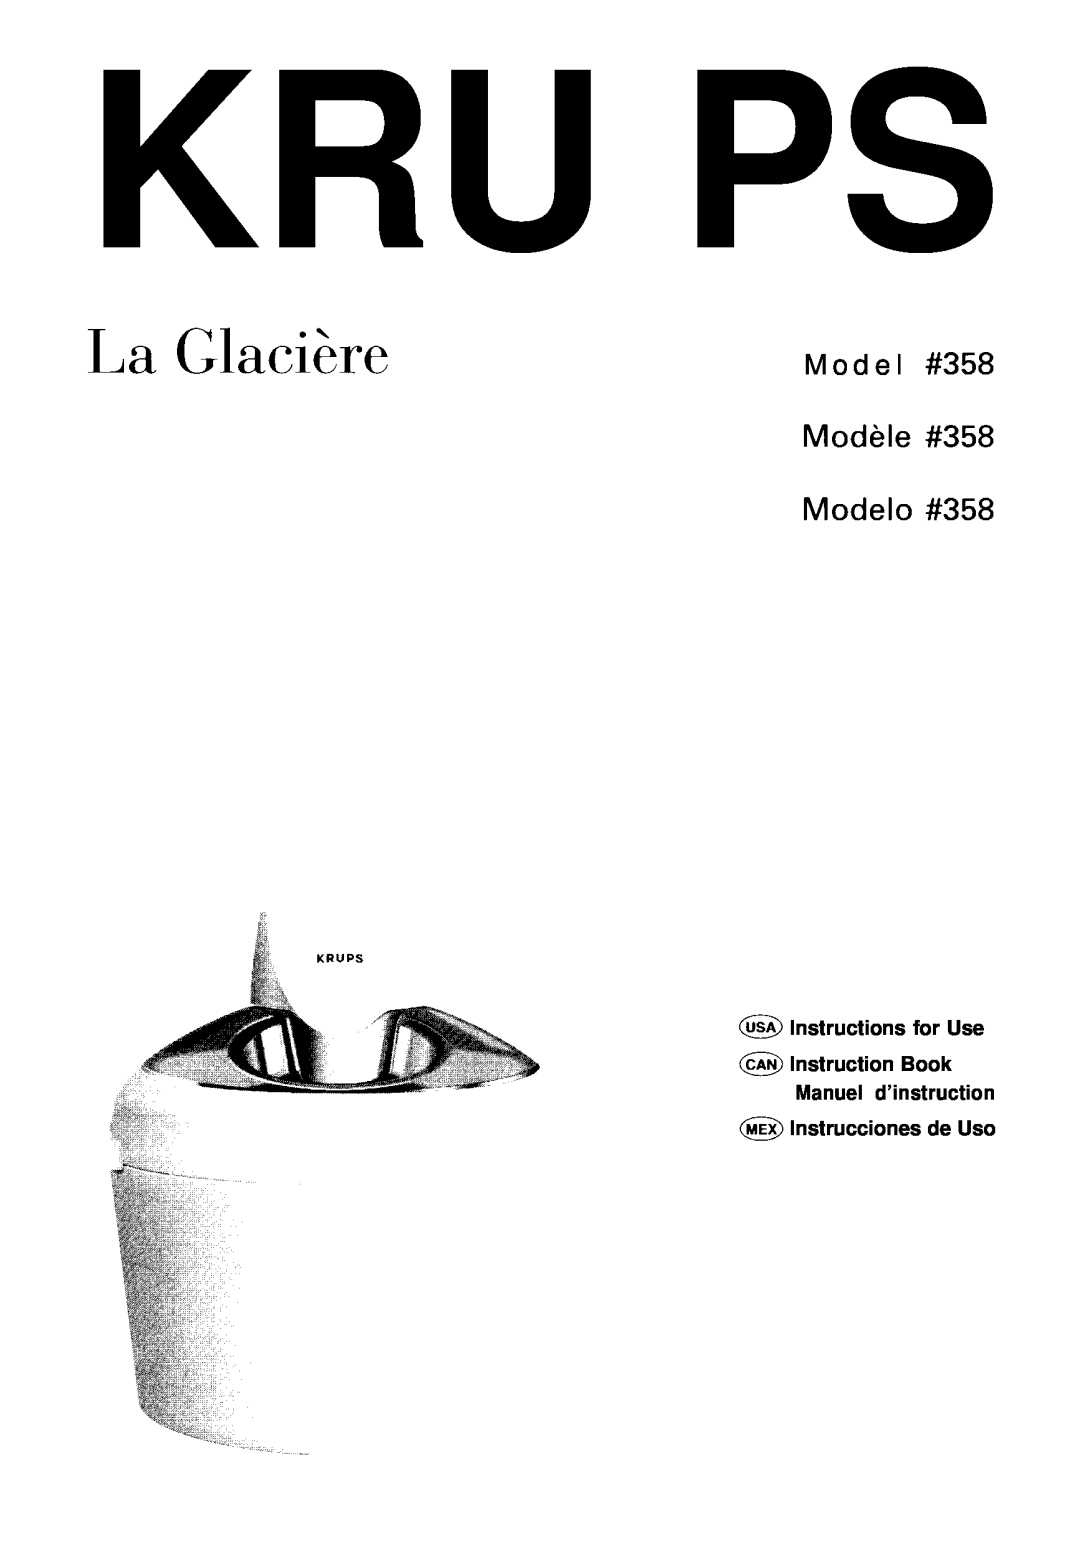 KitchenAid manual La Glacikre, Kru Ps, Model #358 Modkle #358 Modelo #358 